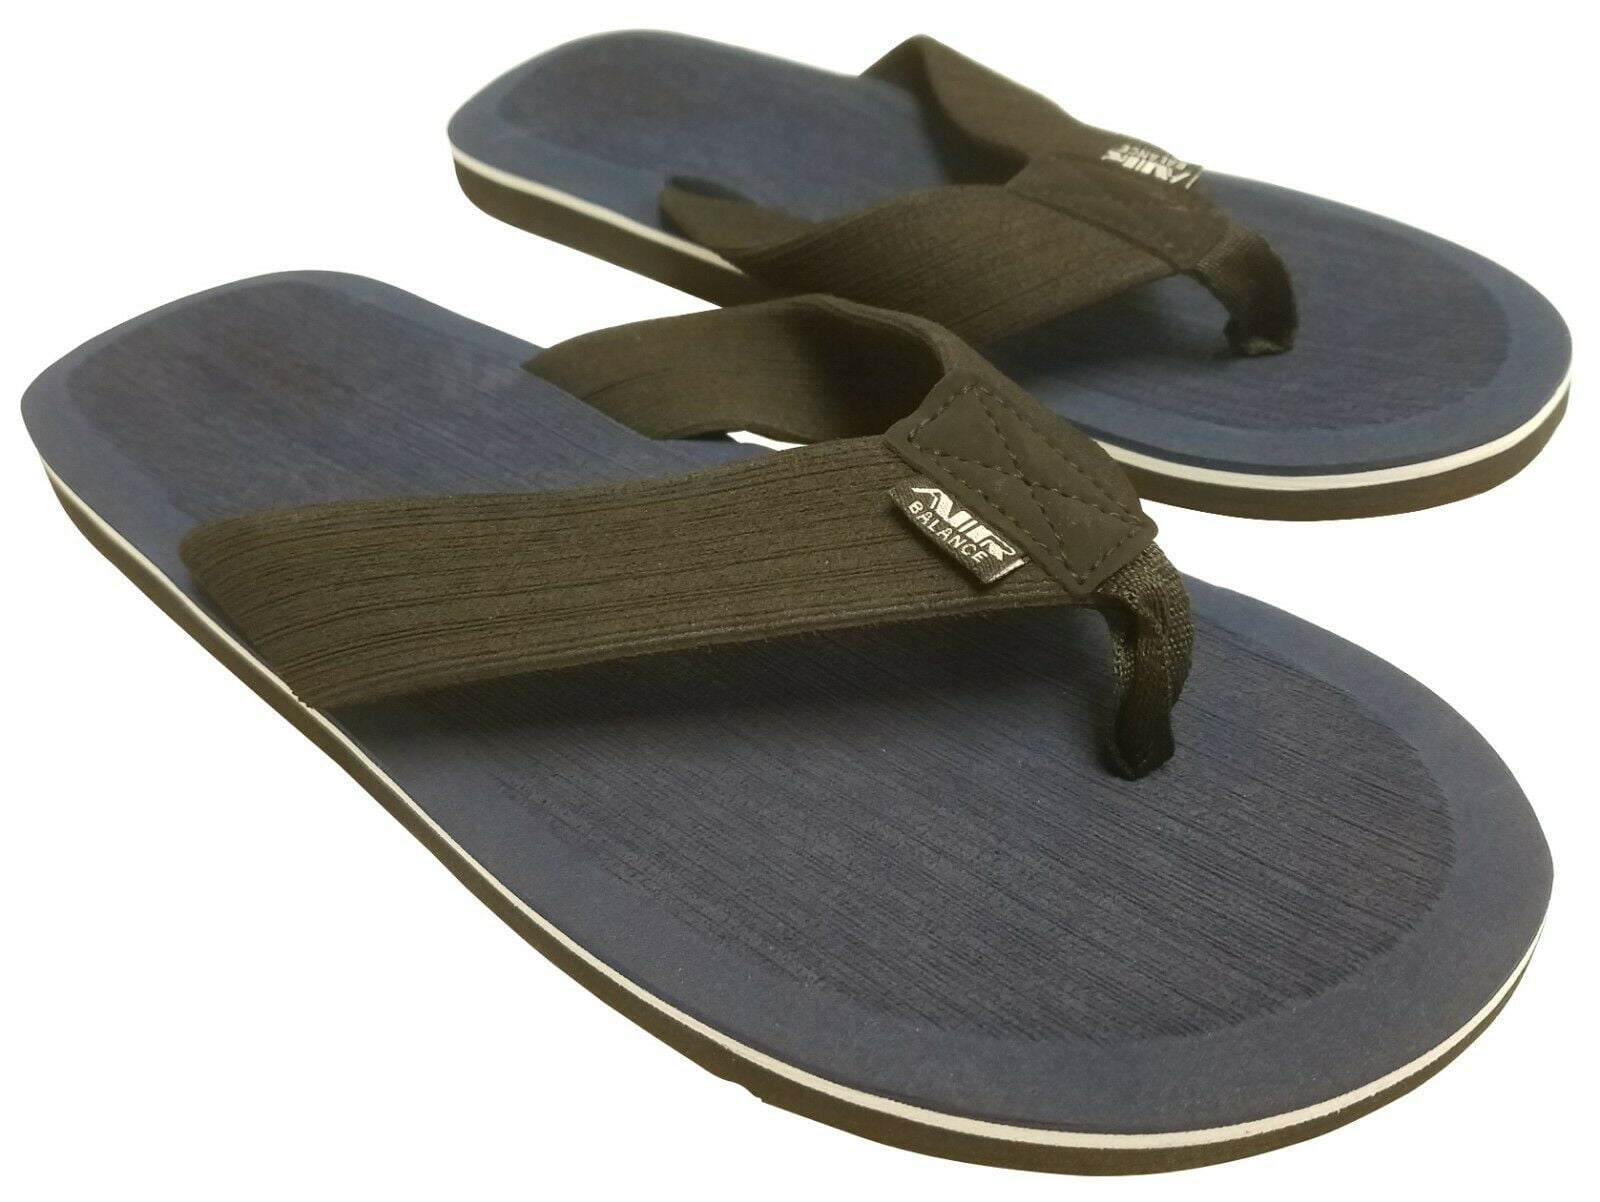 Black sizes 8-13 Brown Navy Air Balance Men's Flip Flop Sandals Slide Shoes 